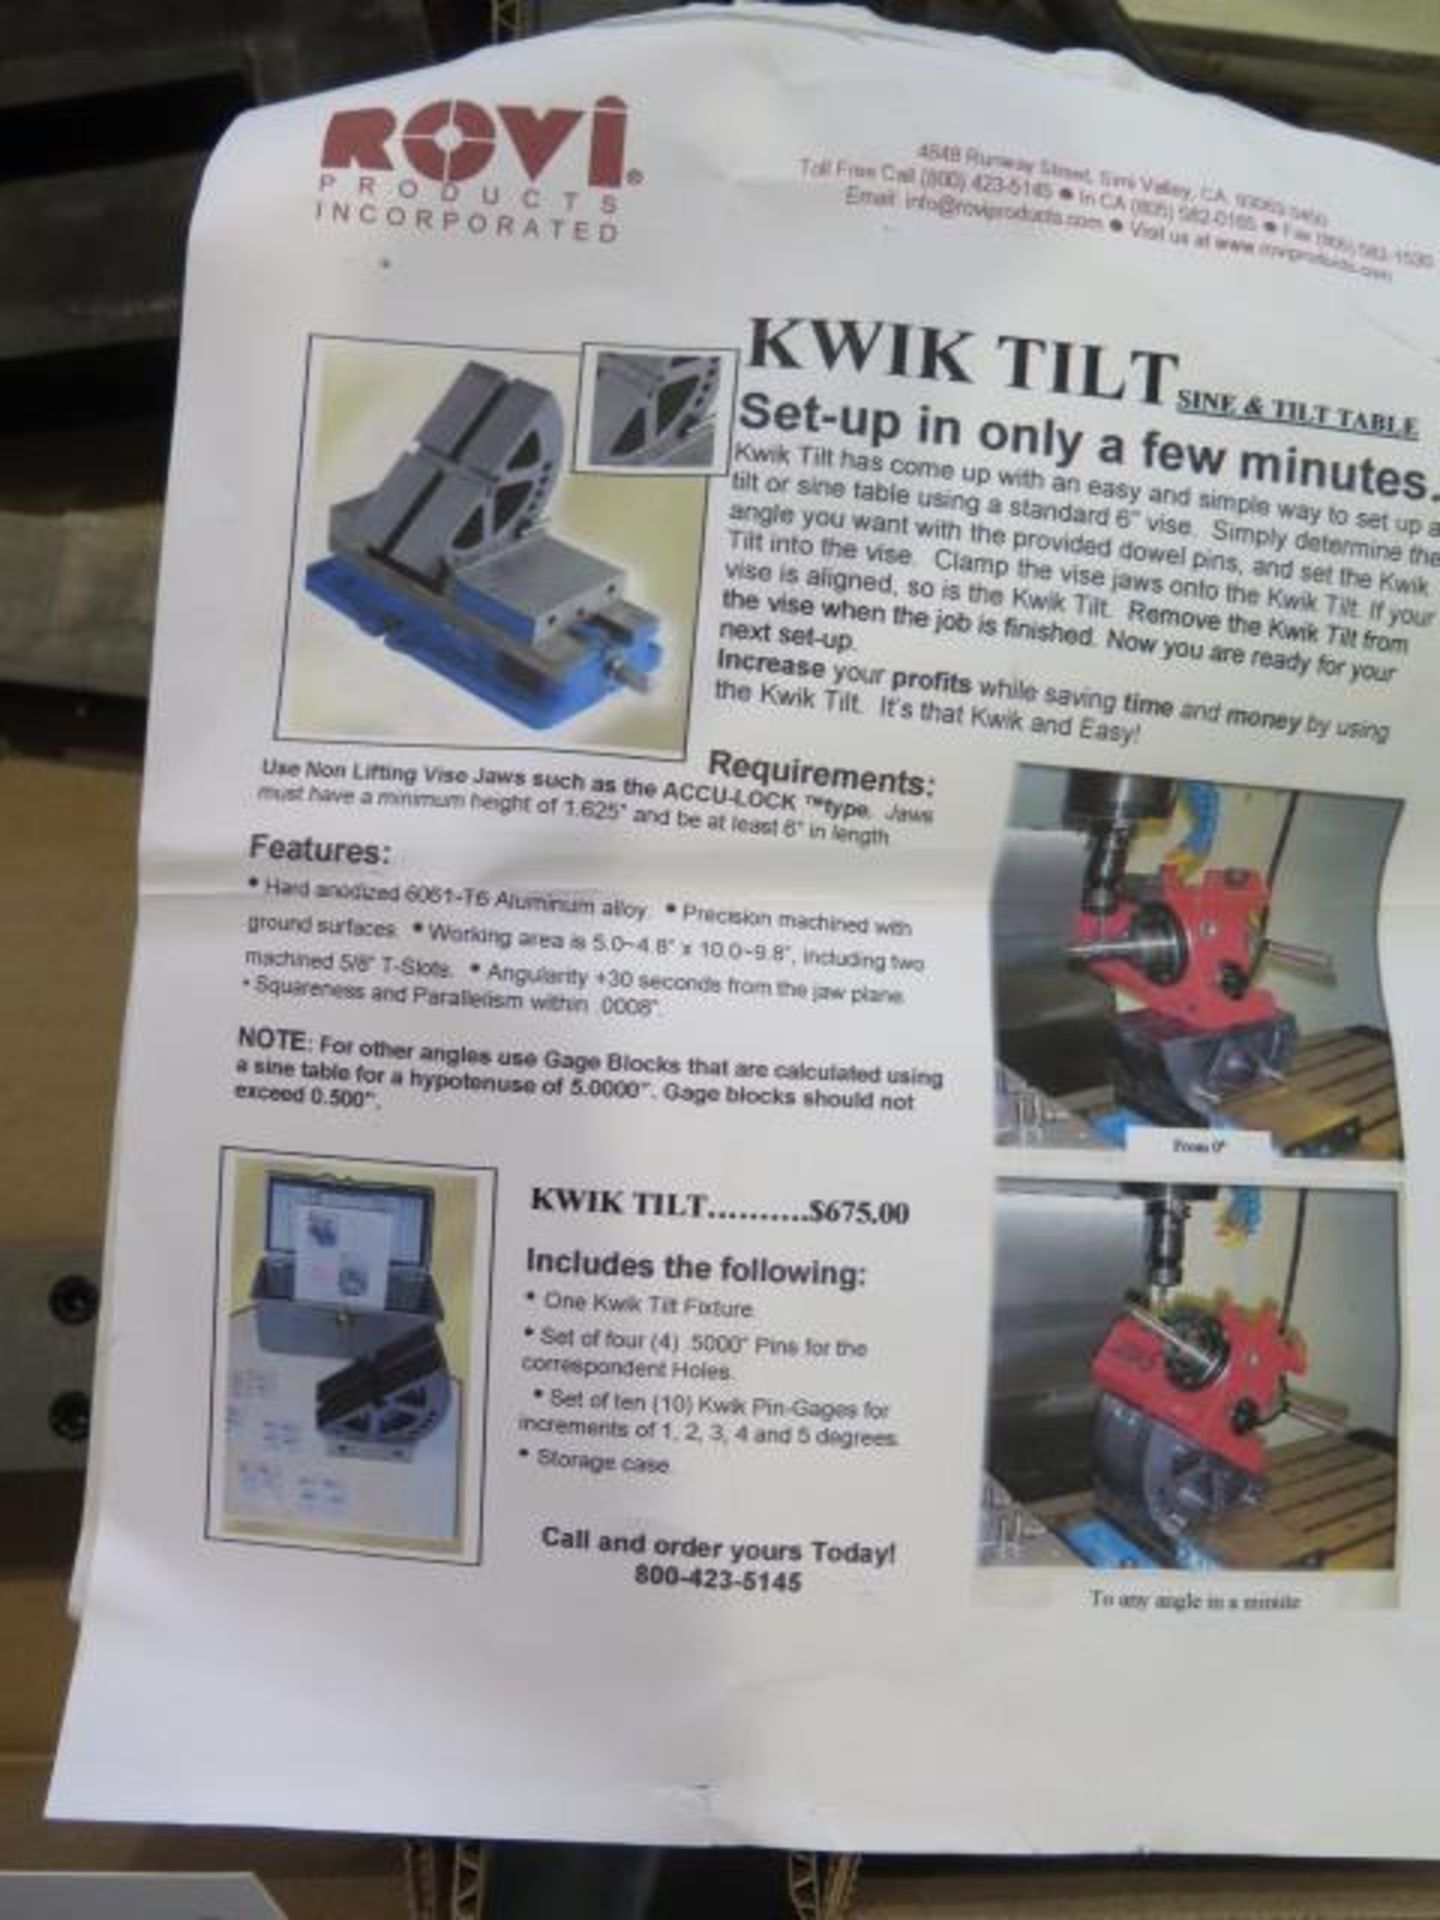 Rovi "Kwik-Tilt" Sine and Tilt Table (SOLD AS-IS - NO WARRANTY) - Image 4 of 5